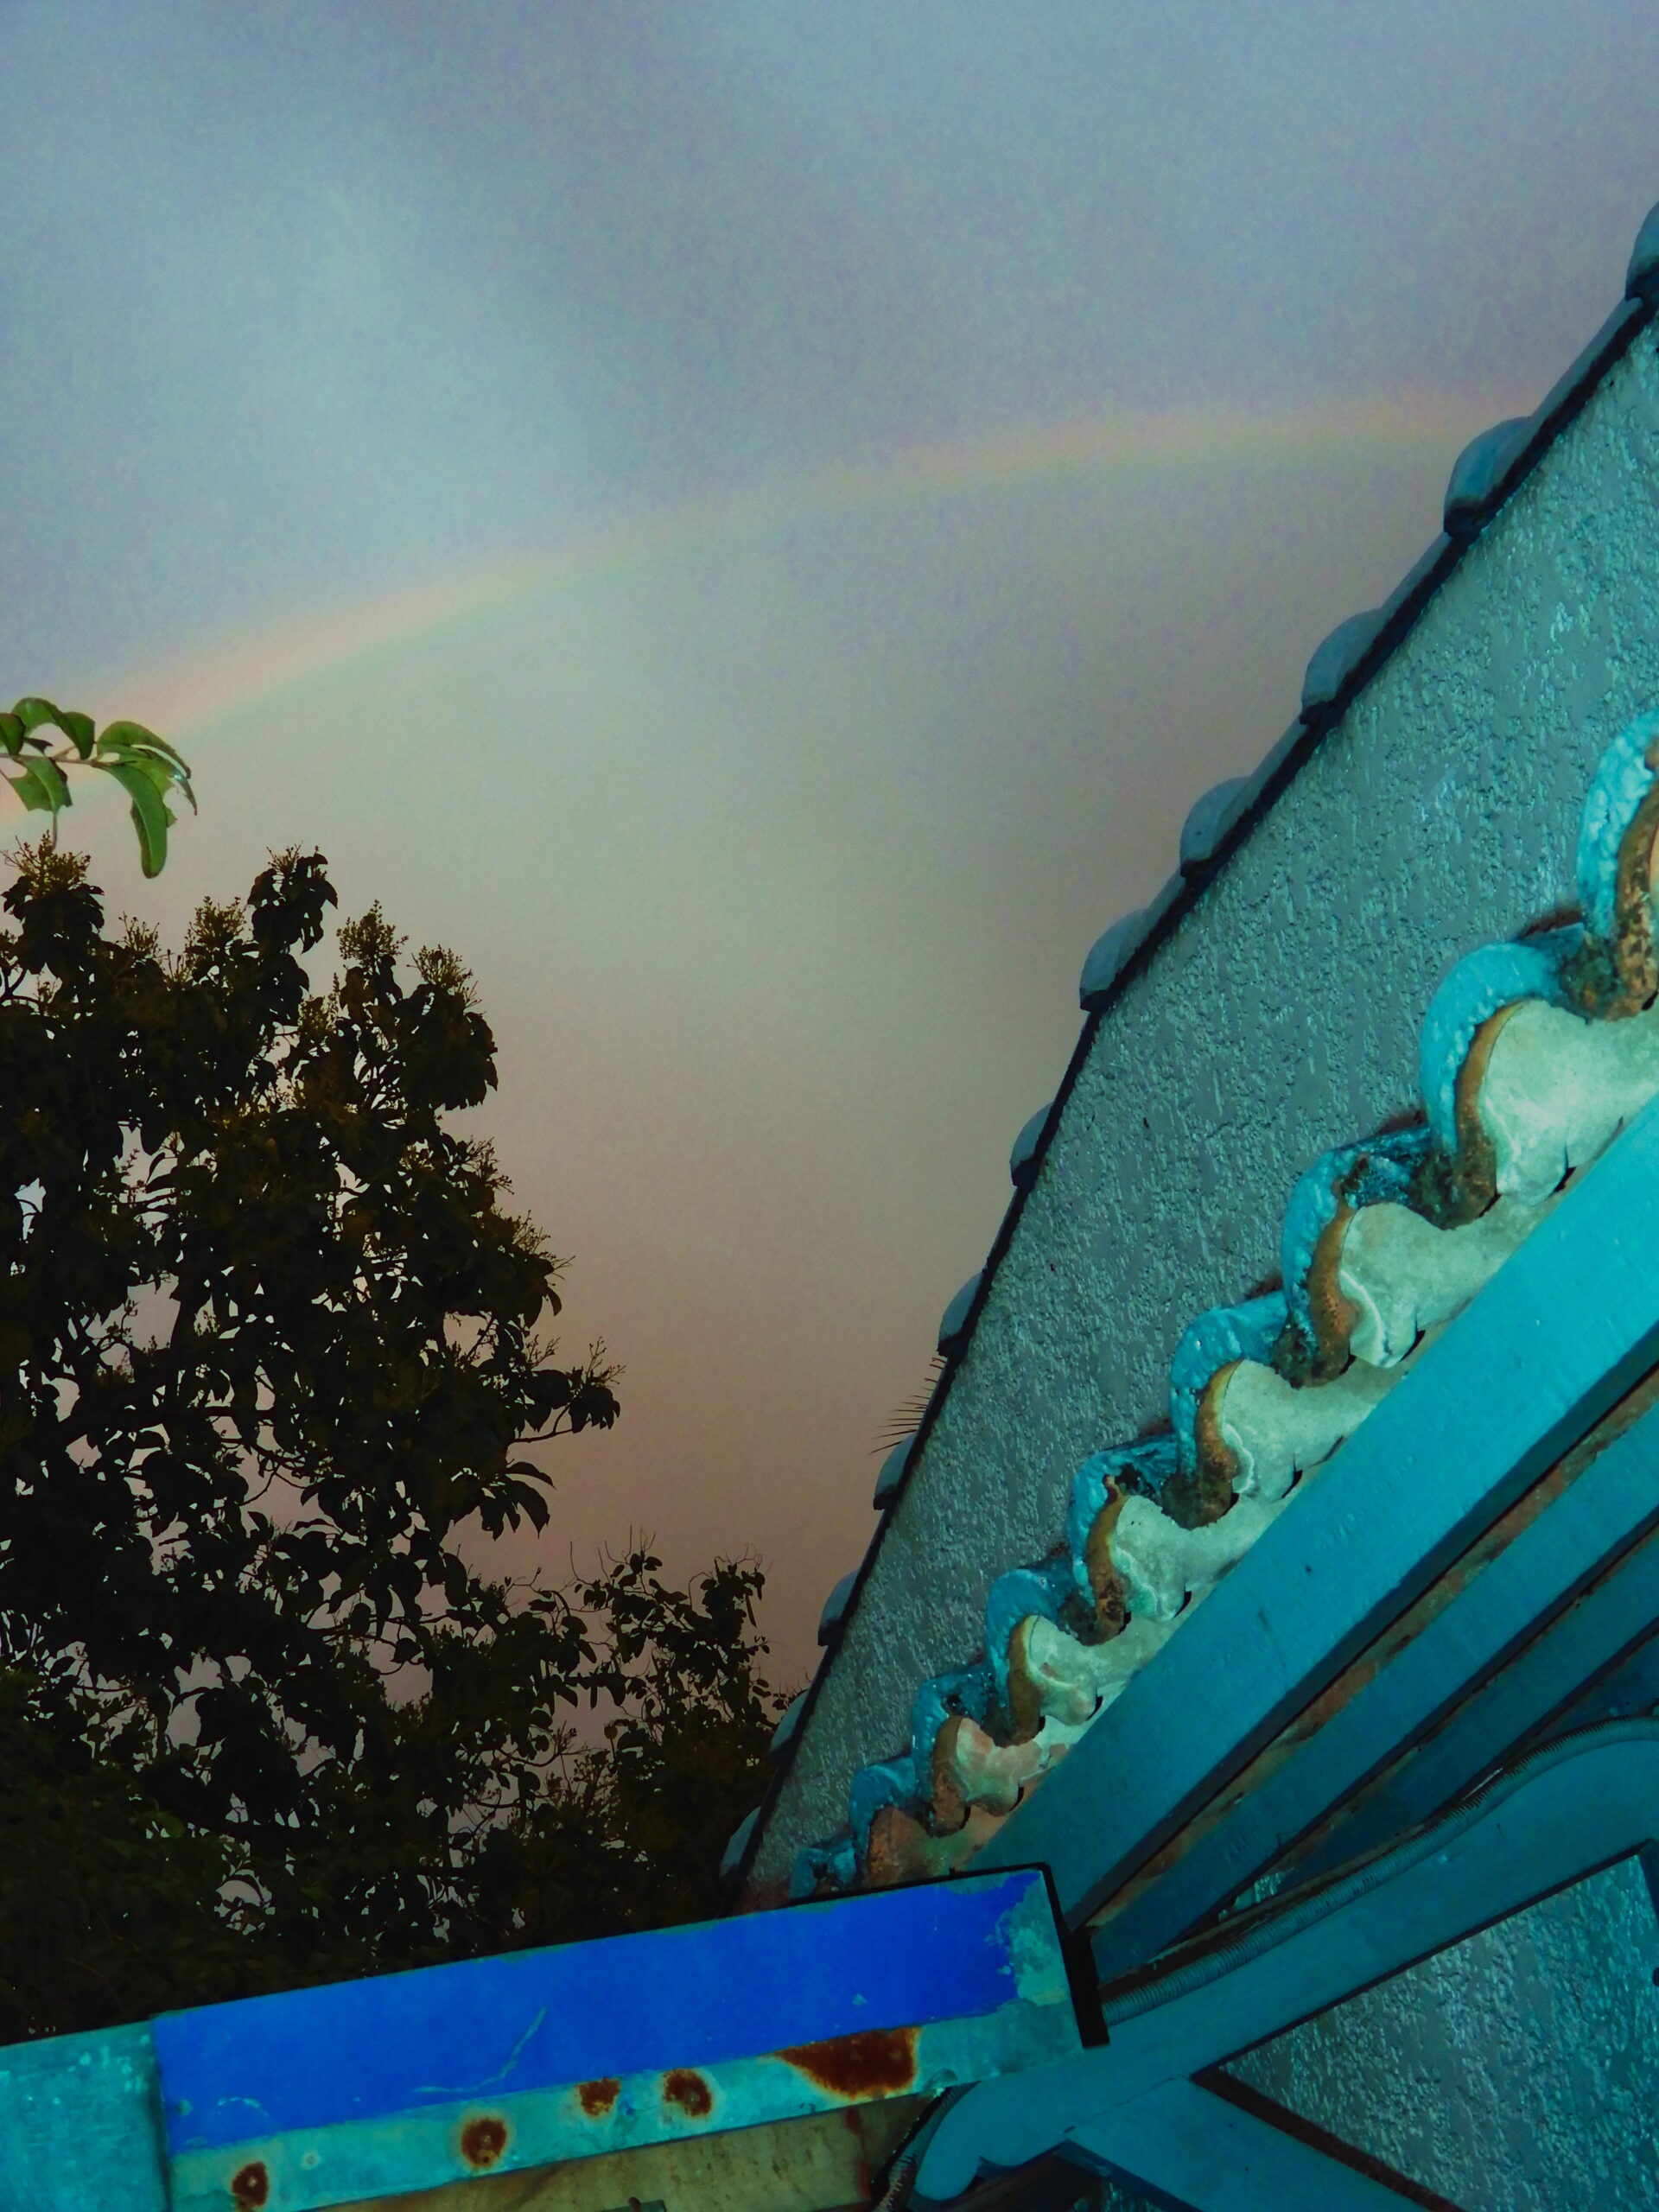 Rainbow photo outside the house